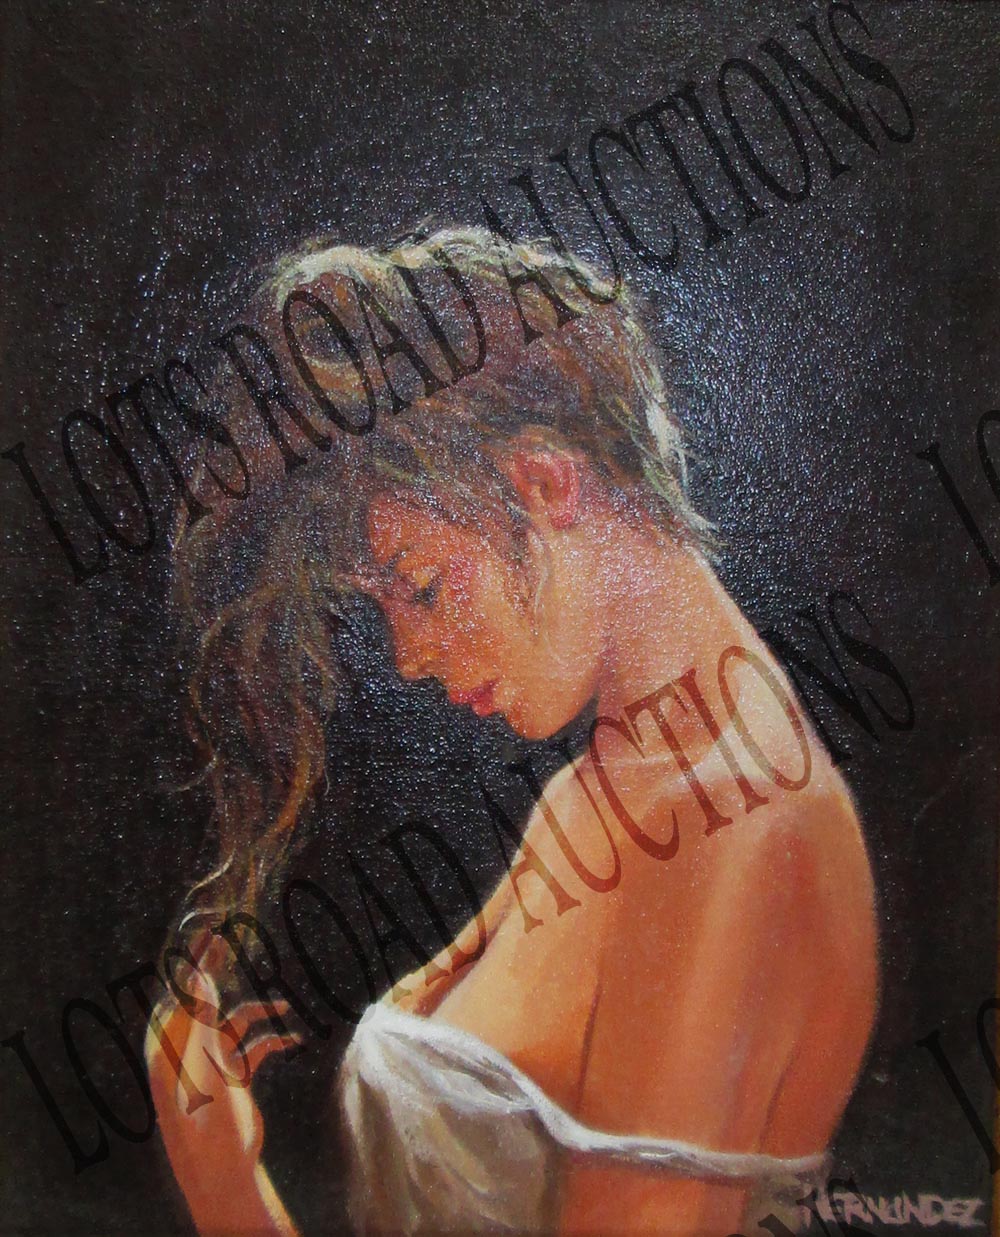 JUAN HERNANDEZ (Spanish) 'After the Shower', oil on board, 25cm x 20cm, signed and framed. (Please